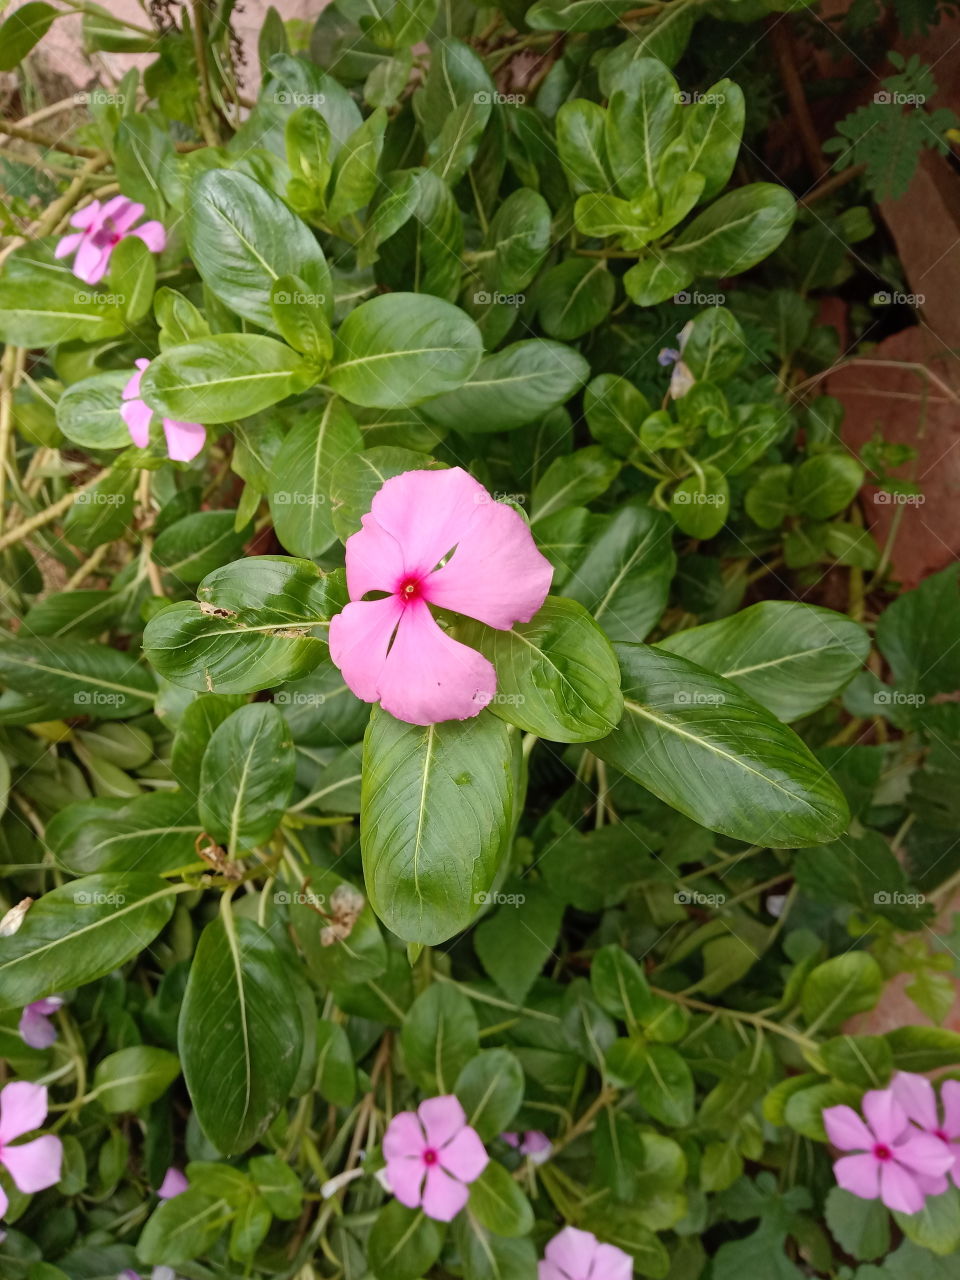 small but beautiful flower